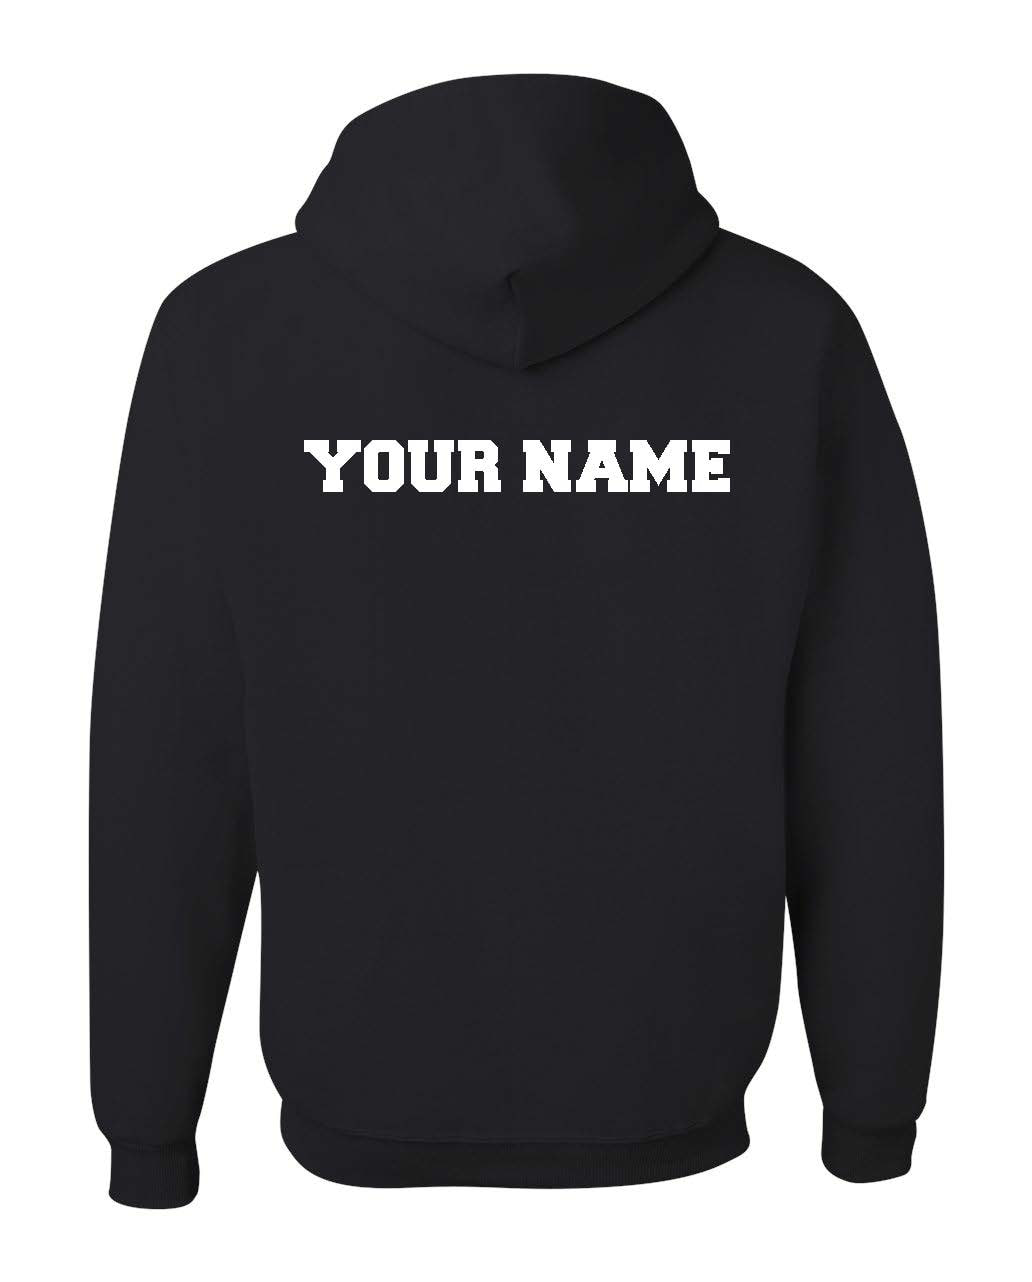 UNISEX Hooded Sweatshirt (CUSTOM NAME ON BACK)